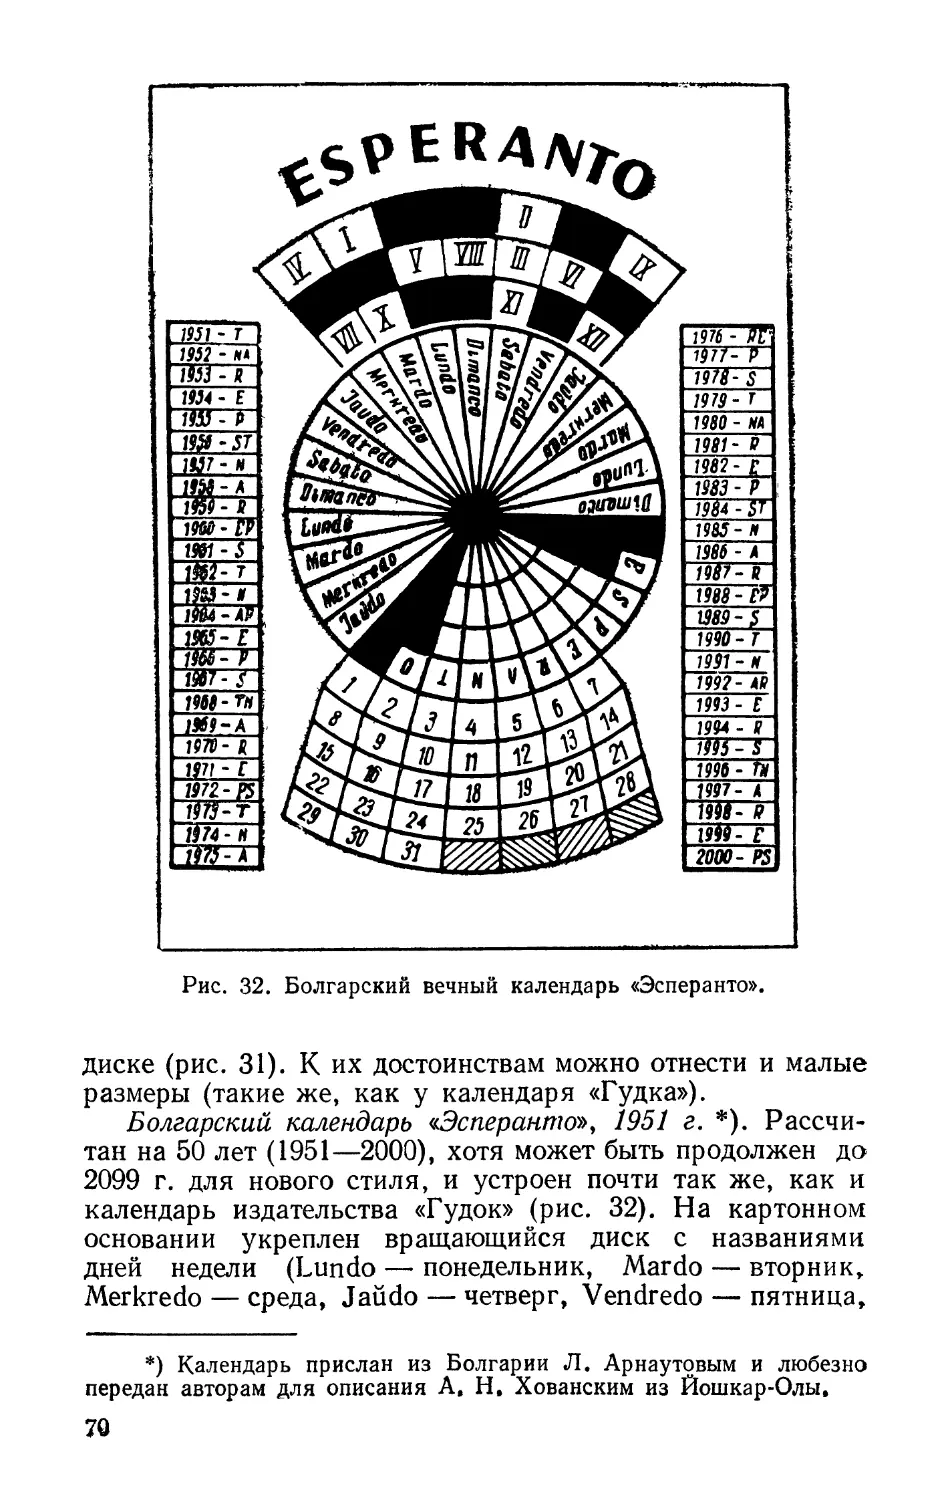 Болгарский календарь «Эсперанто», 1951 г.